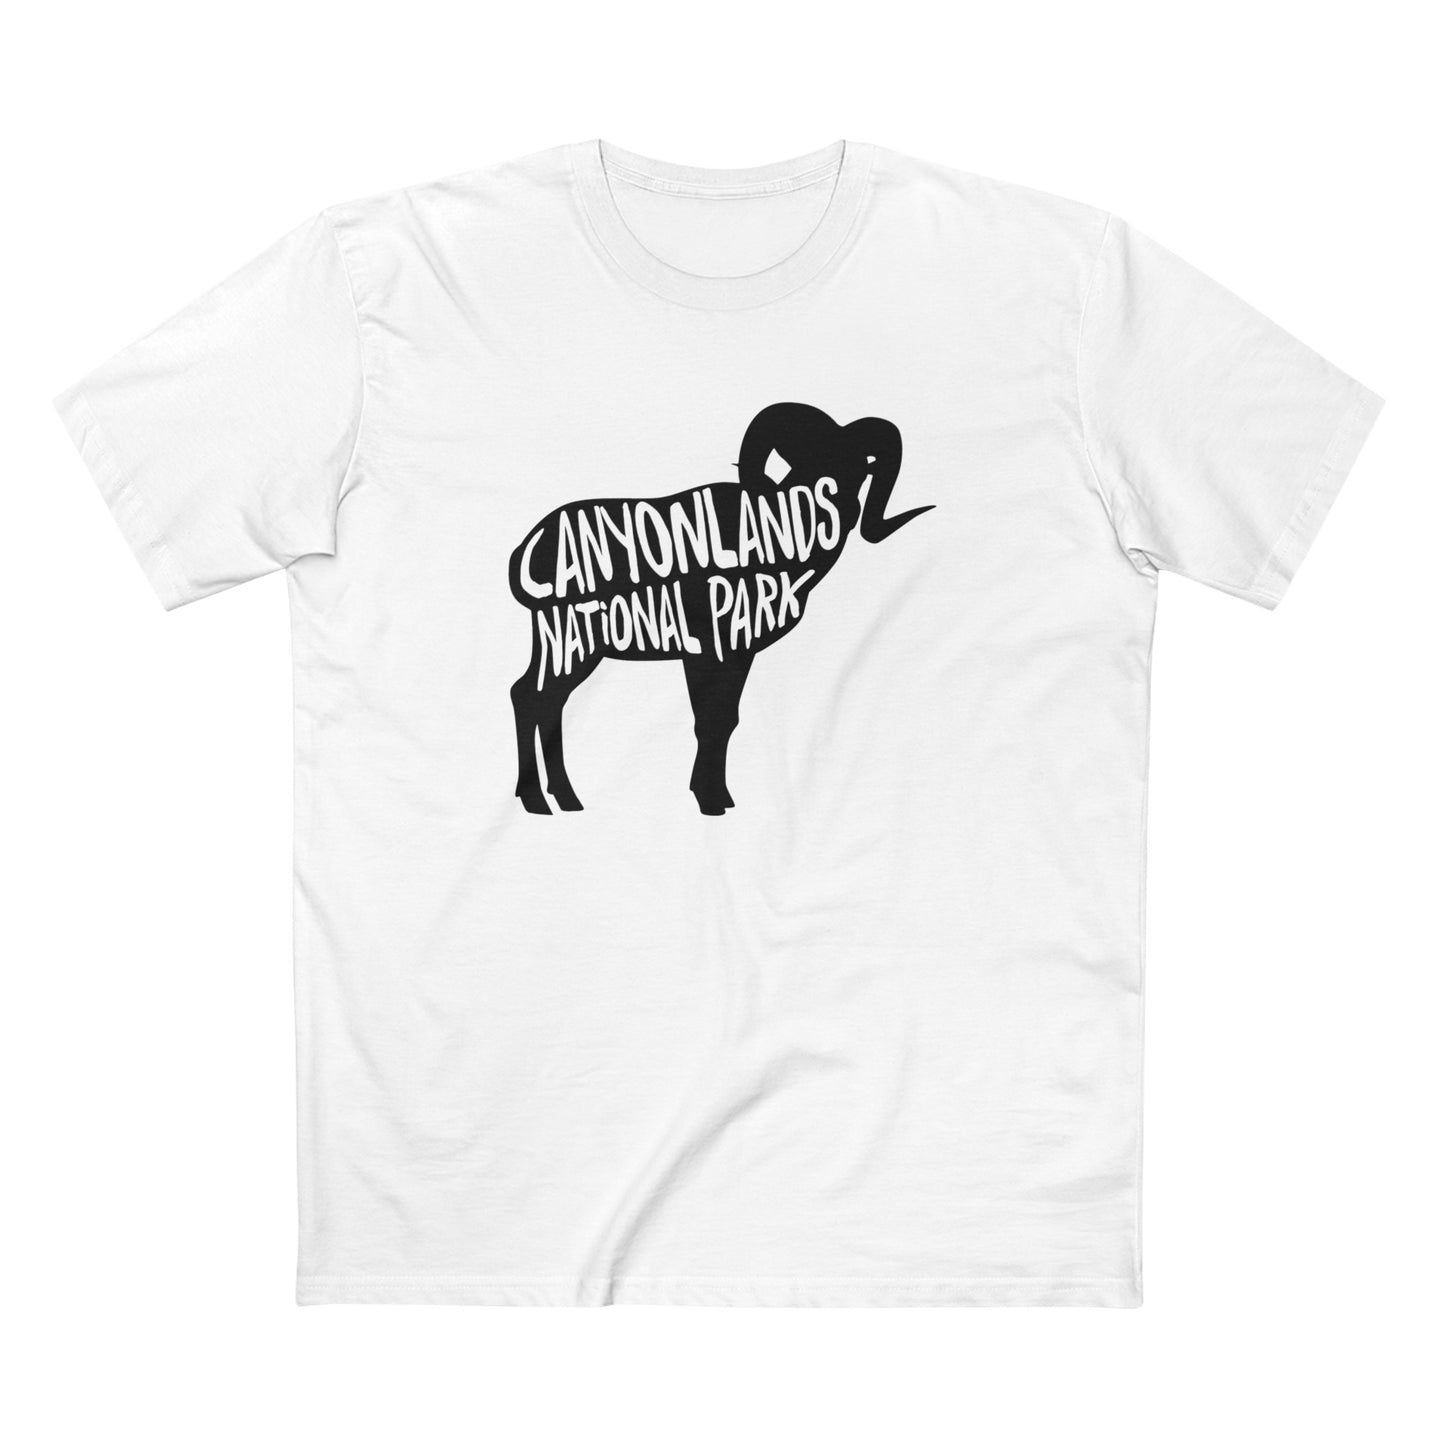 Canyonlands National Park T-Shirt - Bighorn Sheep